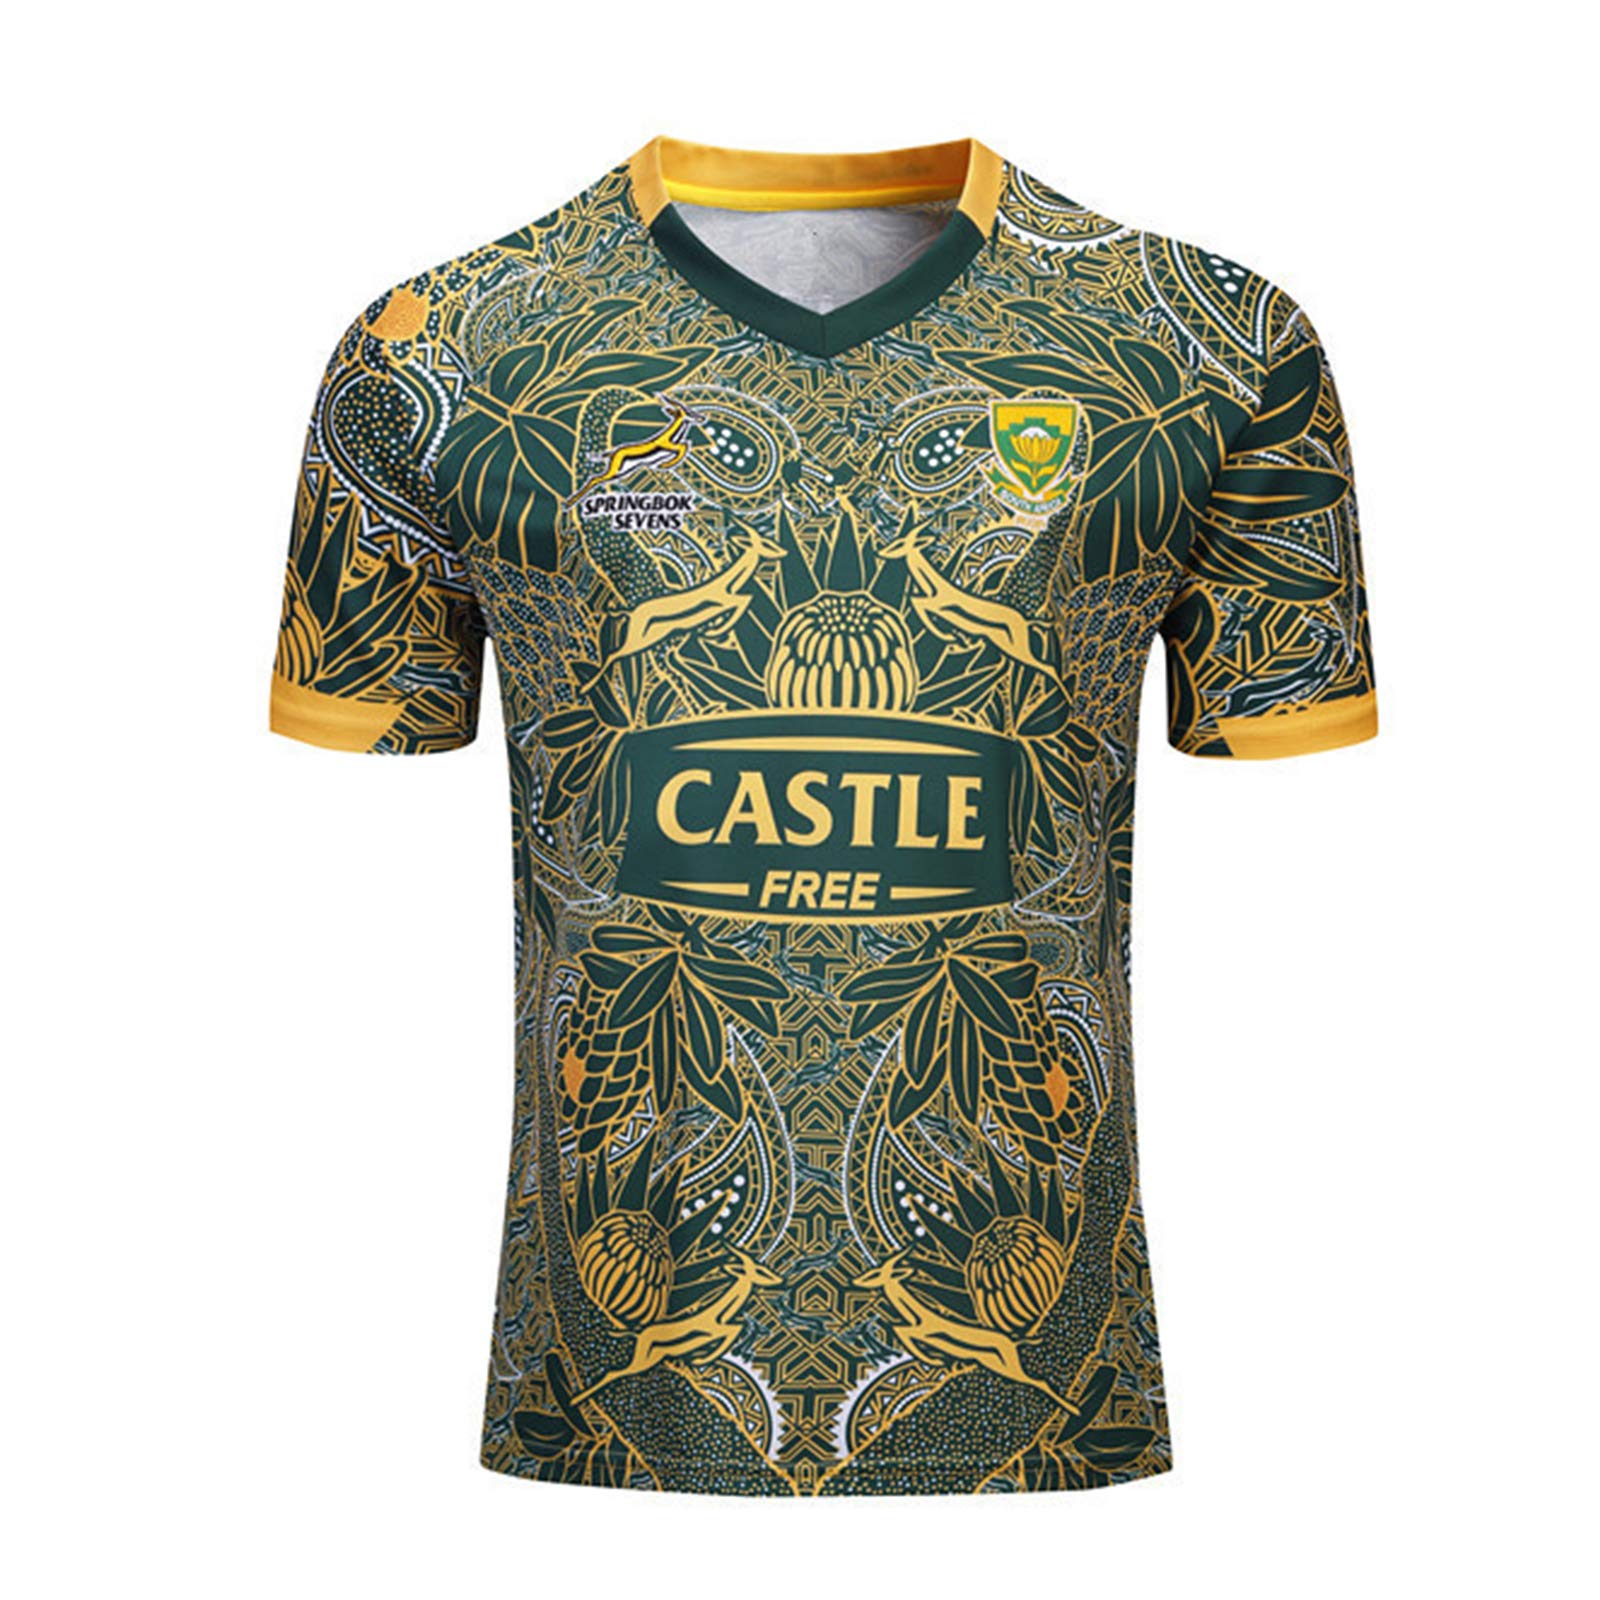 2020 Südafrika Springbok 7S Rugby Jersey-WM 2019 Aus Baumwoll-Jersey-Grafik-T-Shirt 100. Anniversary Edition Fans T-Shirts Kurzarm Trainingssportkleidung Polo-Hemd XXXL